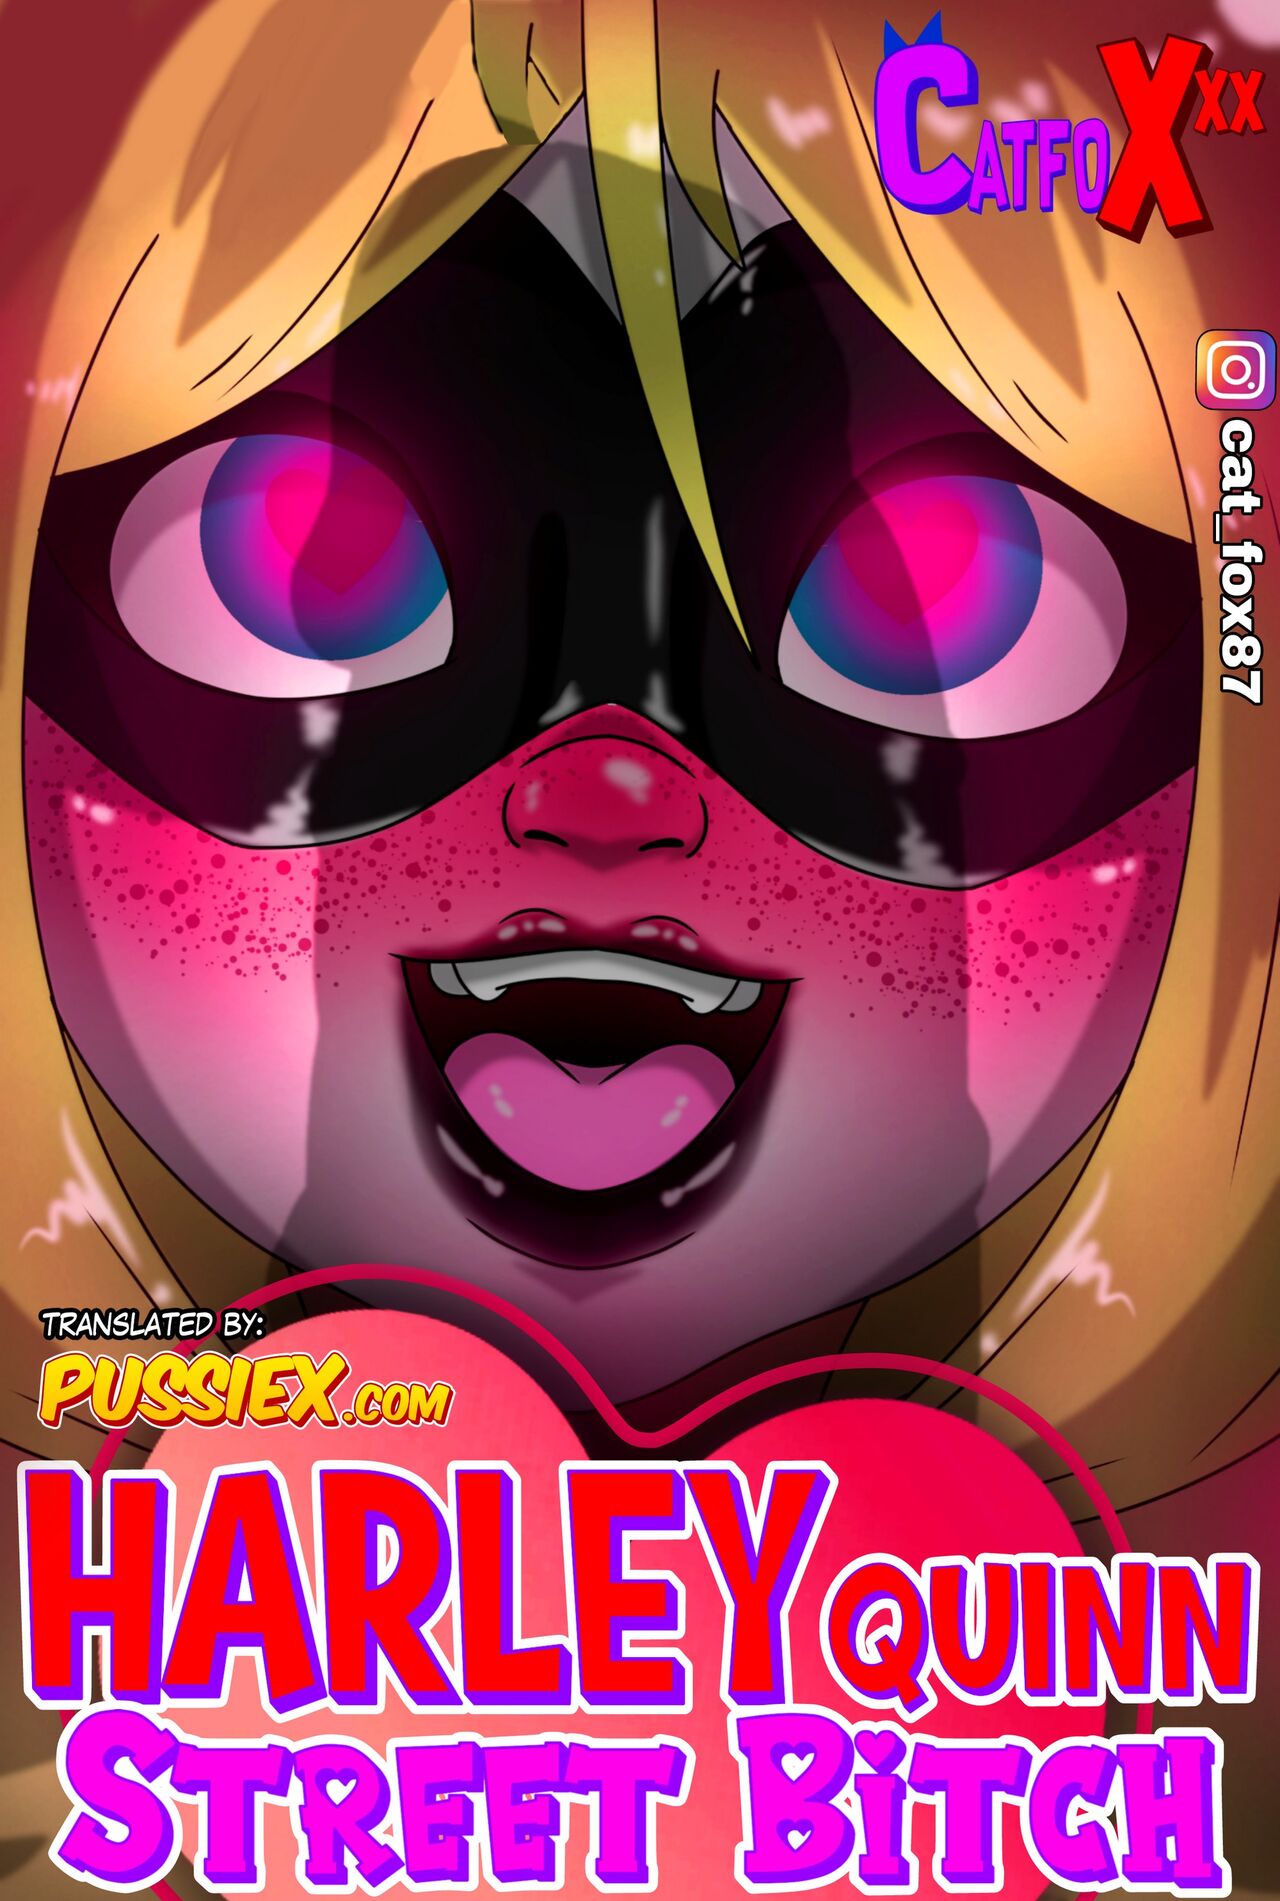 Harley Street Bitch (PussieX) CatFoxxx (English)